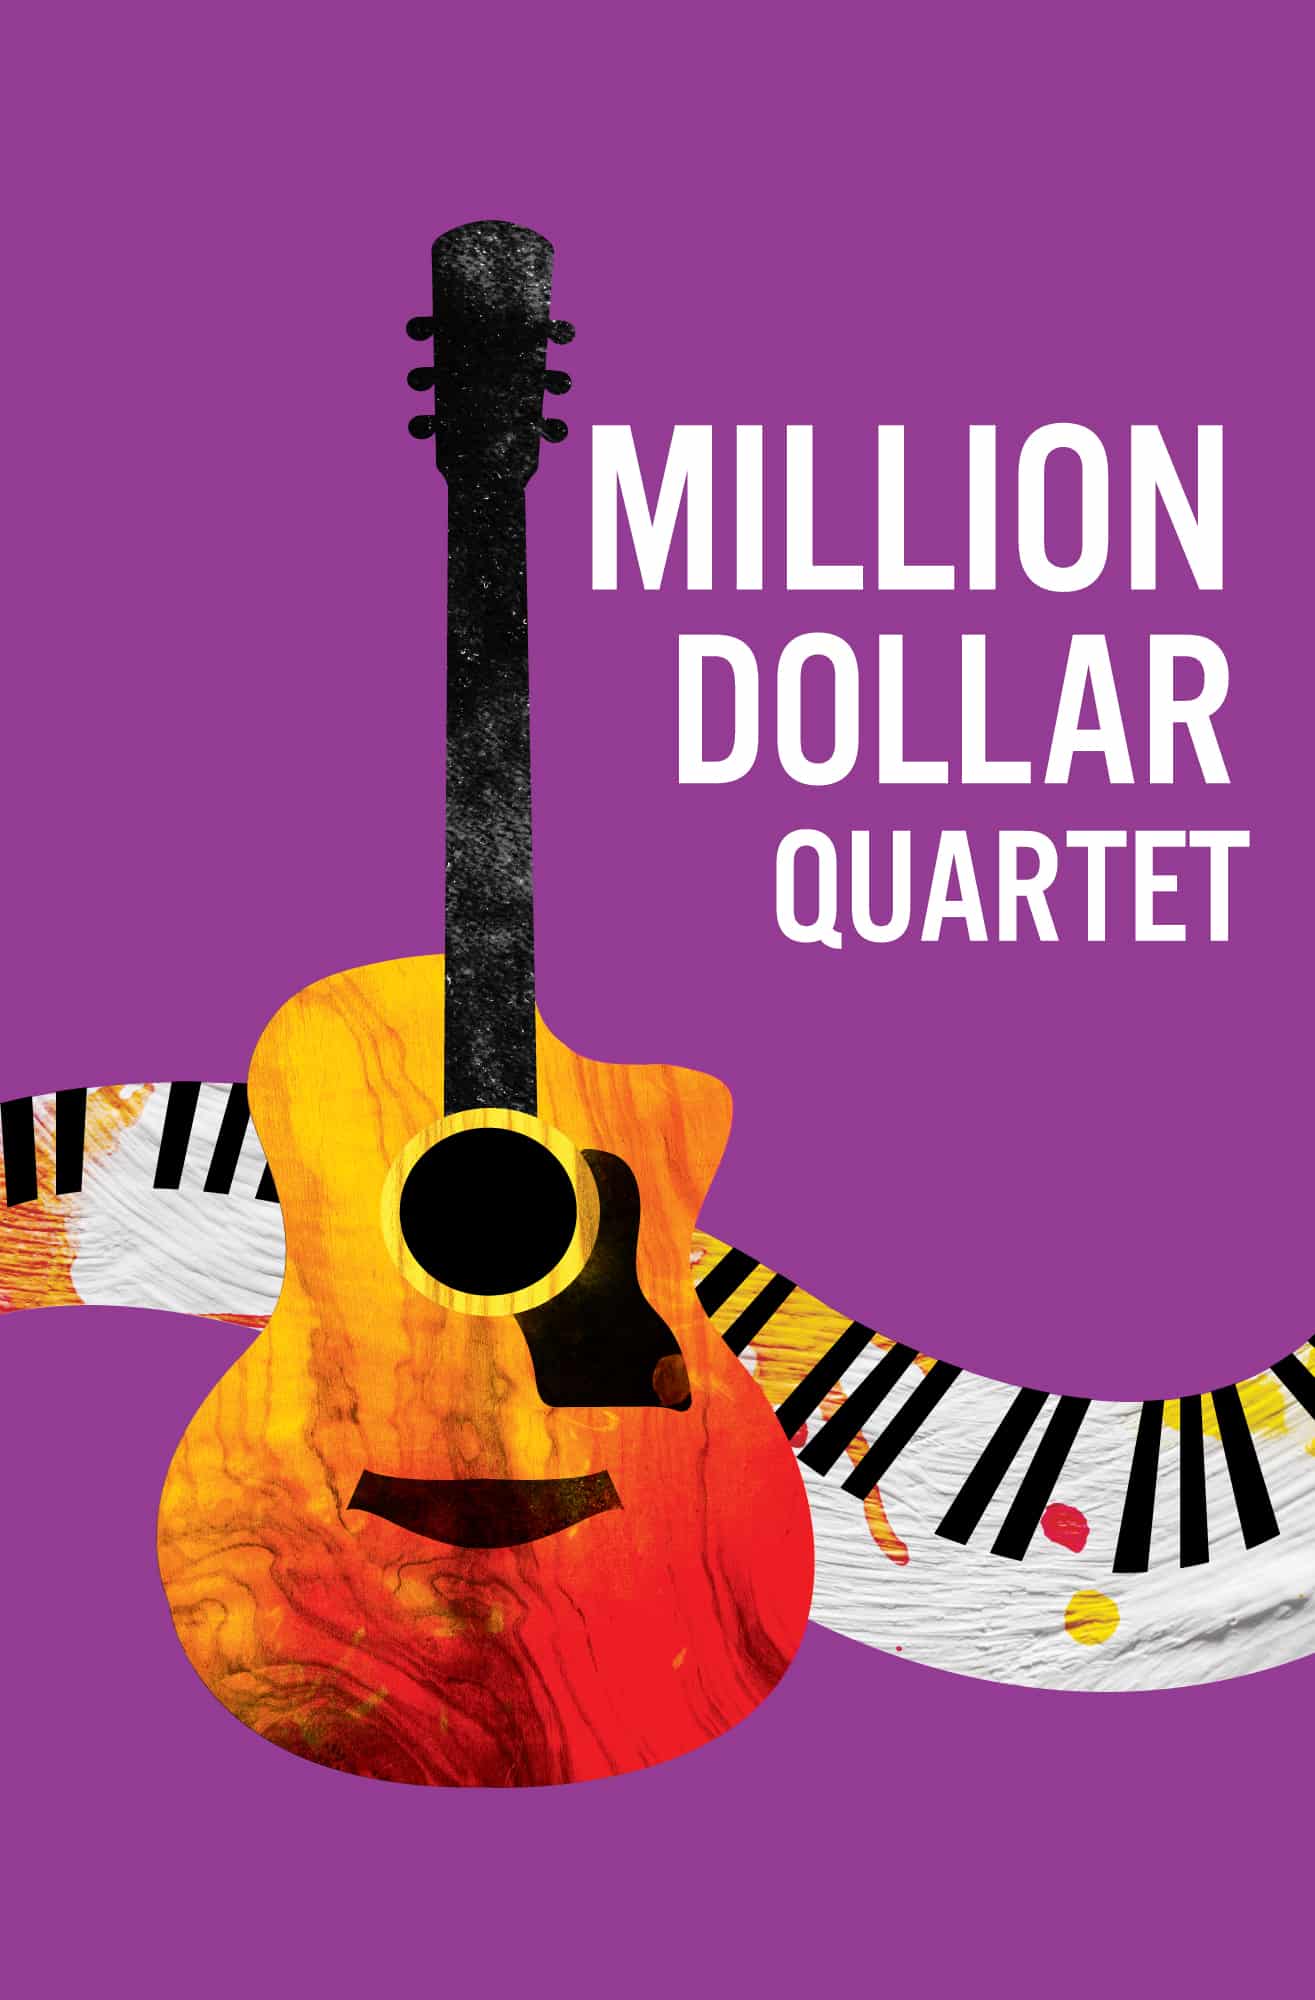 Show Graphic - Million Dollar Quartet